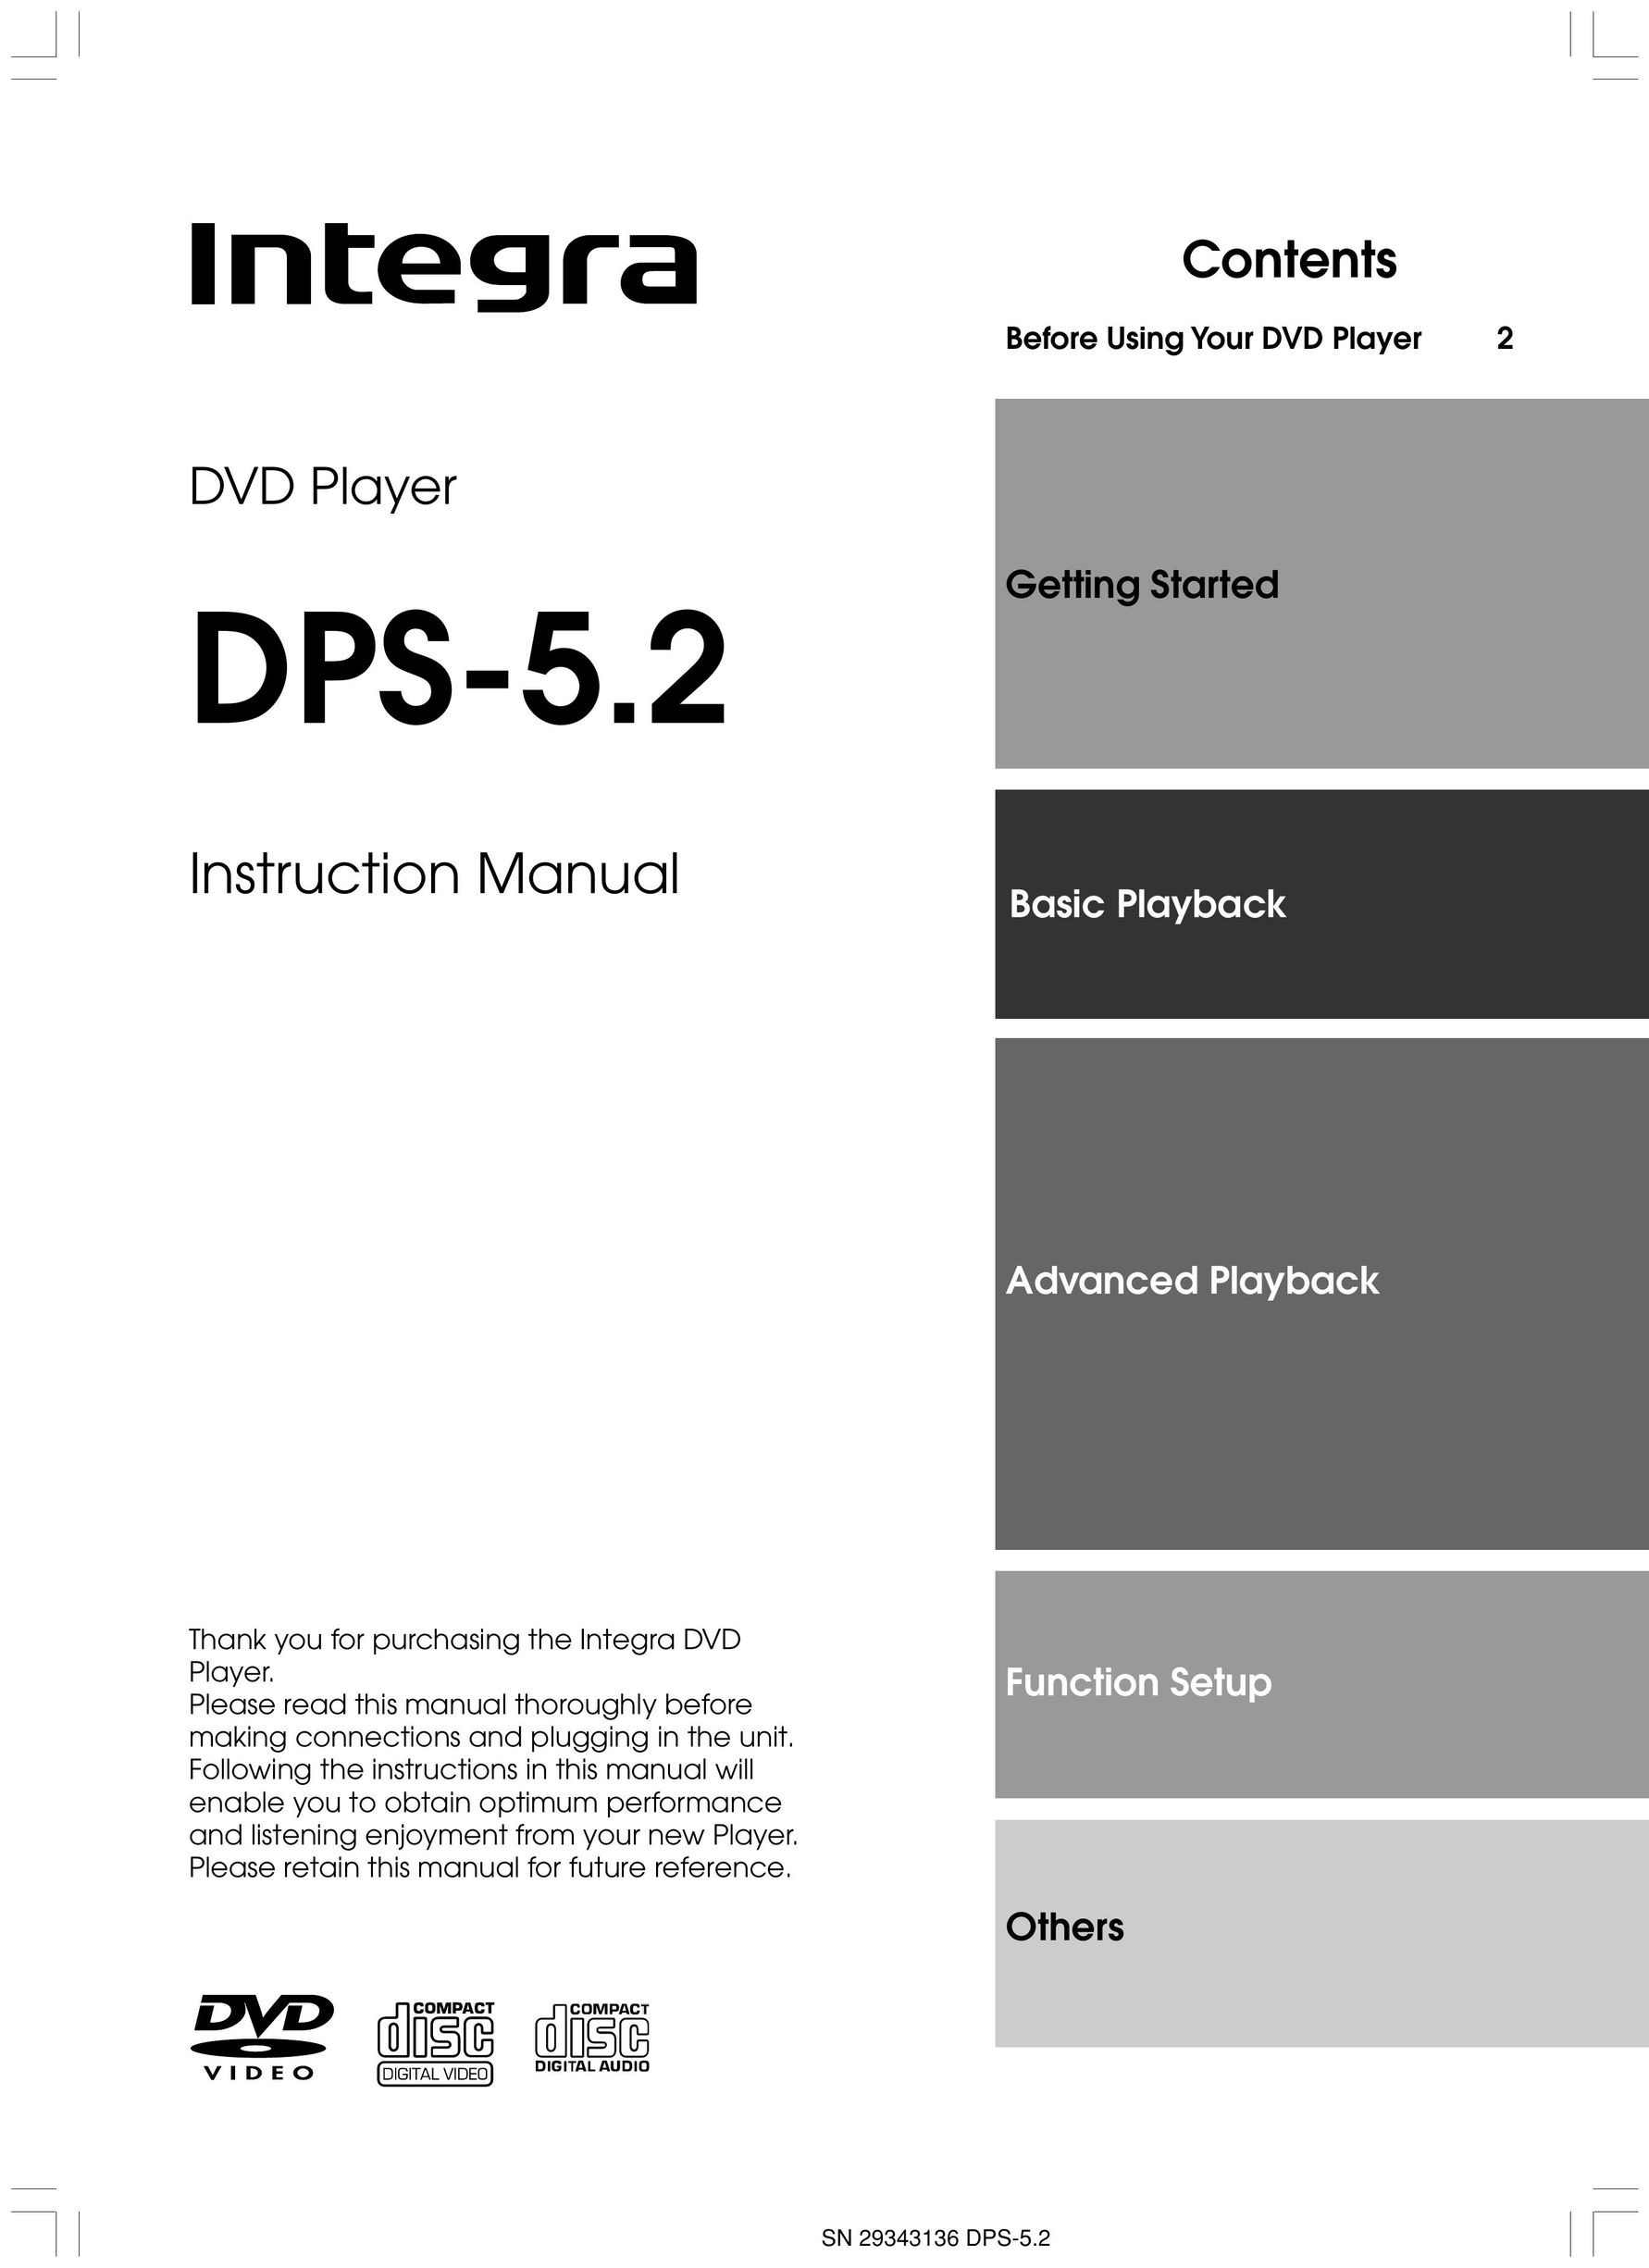 Integra DPS-5.2 DVD Player User Manual